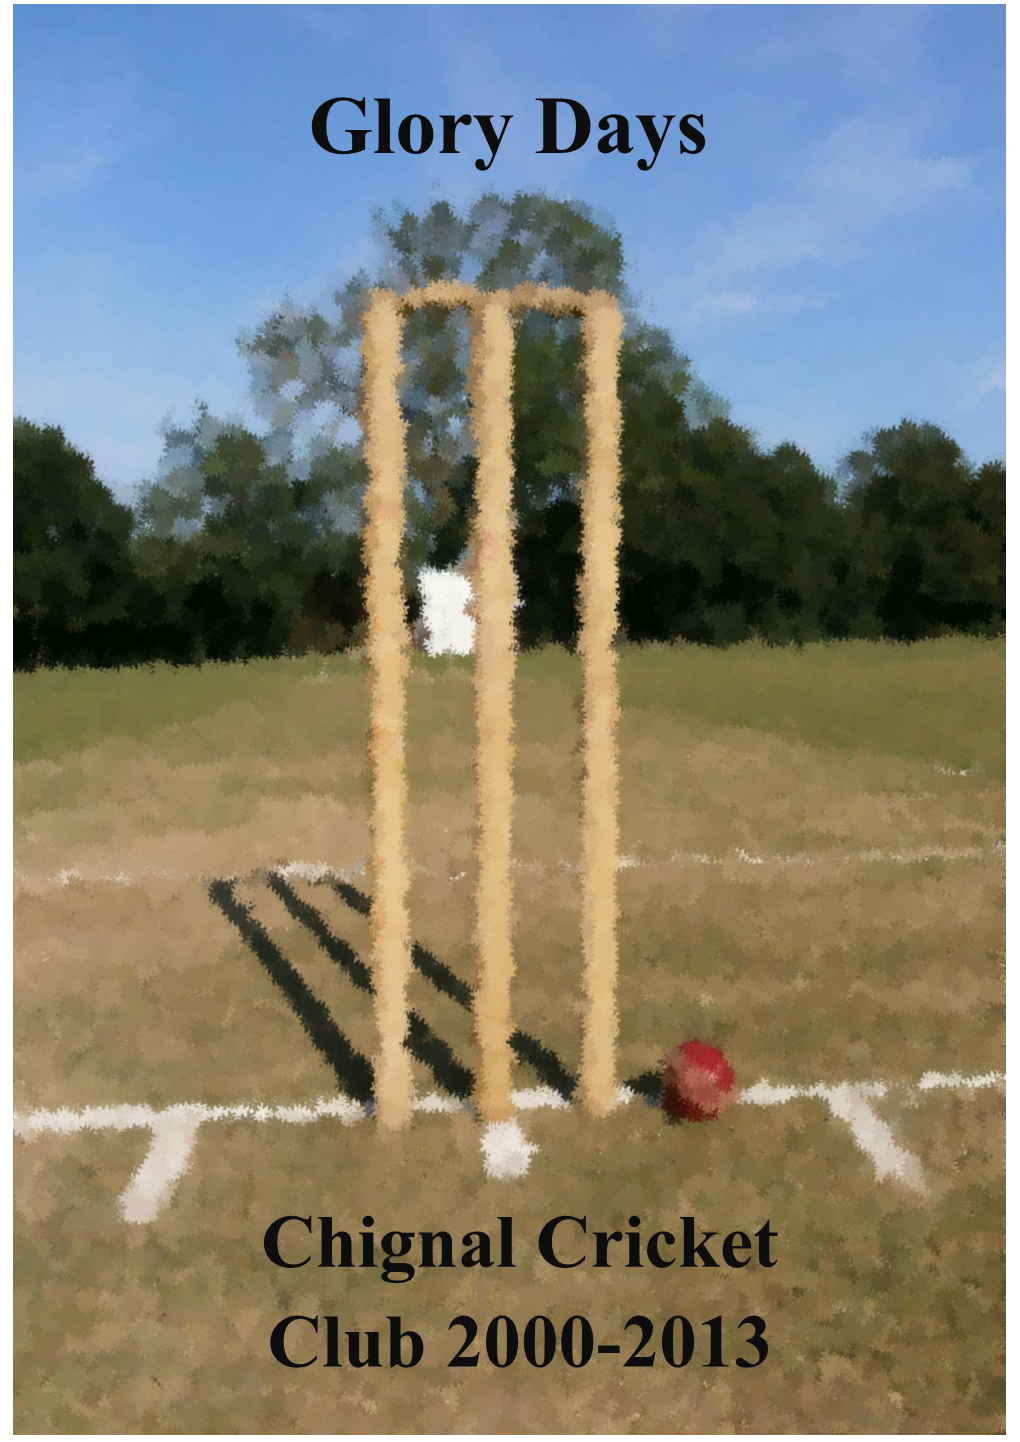 Glory Days: the Adventures of Chignal Cricket Club 2000-2013